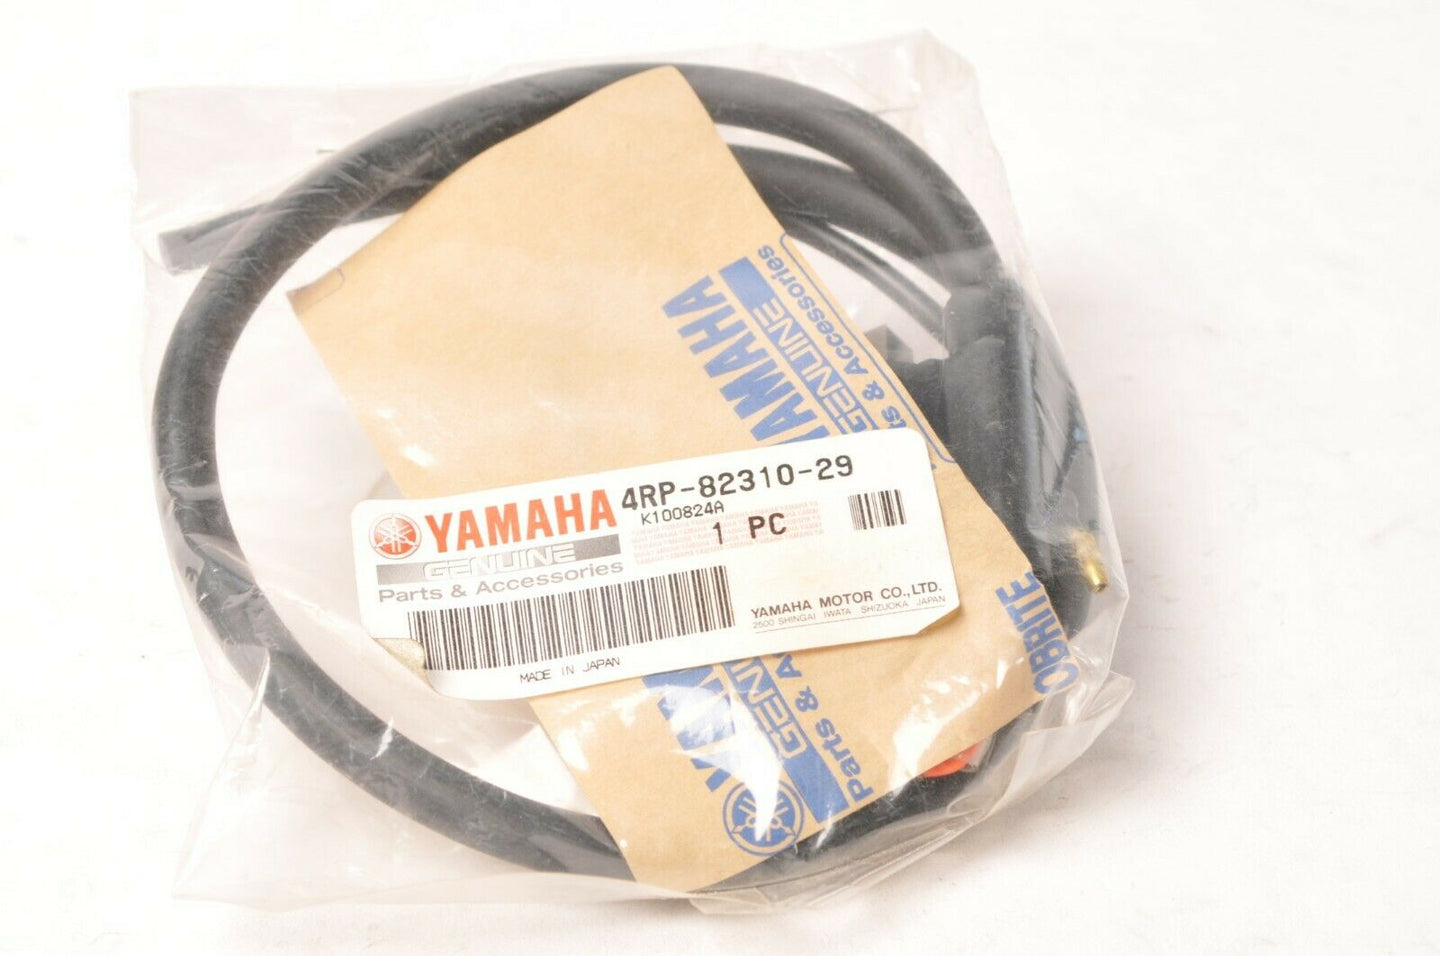 Genuine Yamaha 4RP-82310-29 Ignition Coil Assy., TW200 YSR50 DT50 YZ250 PW50 ++